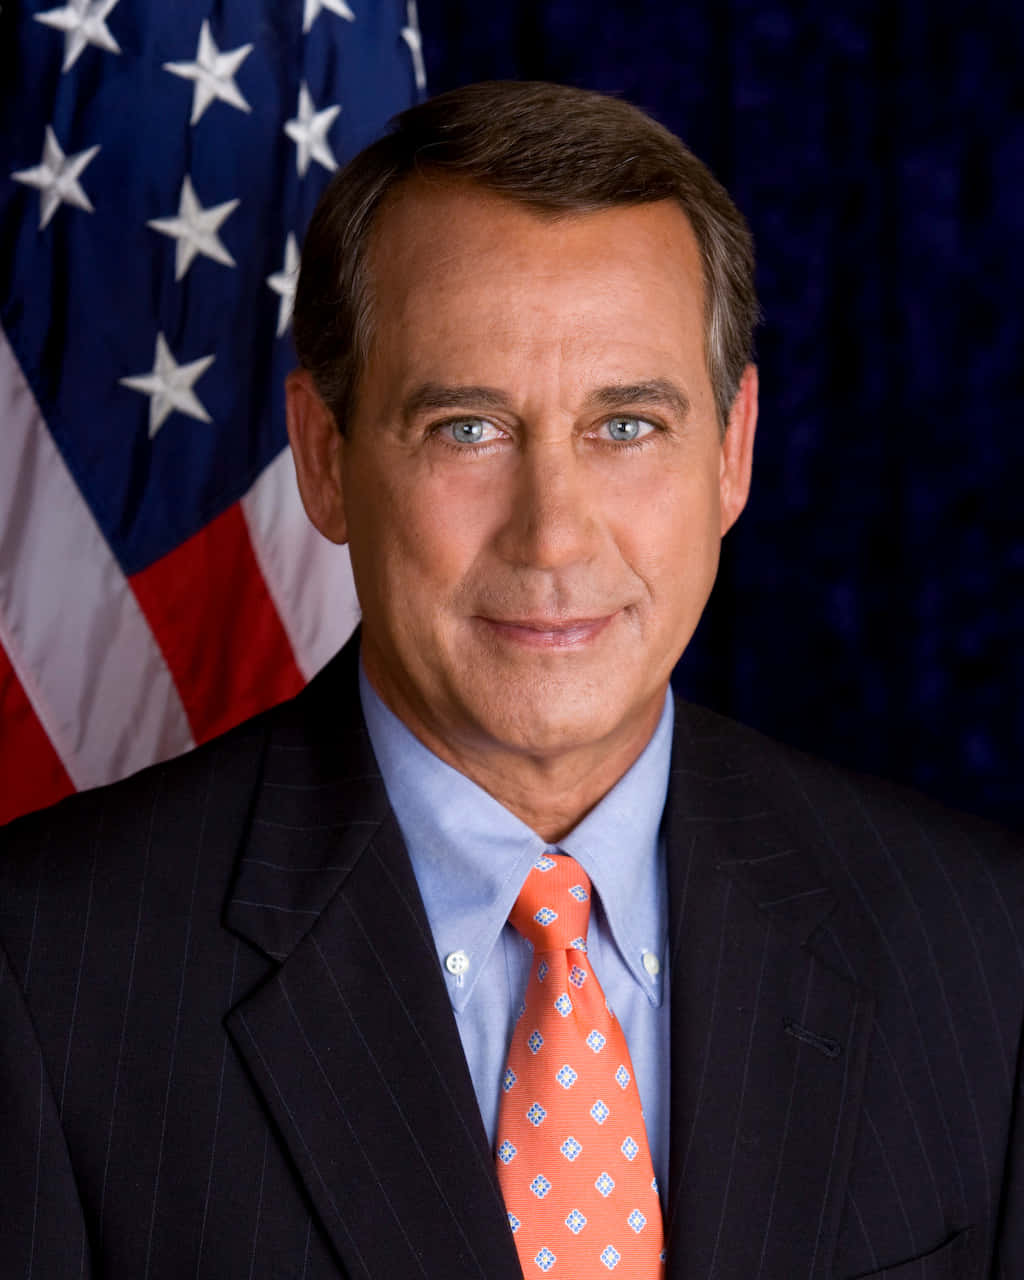 Caption: John Boehner in a formal portrait Wallpaper